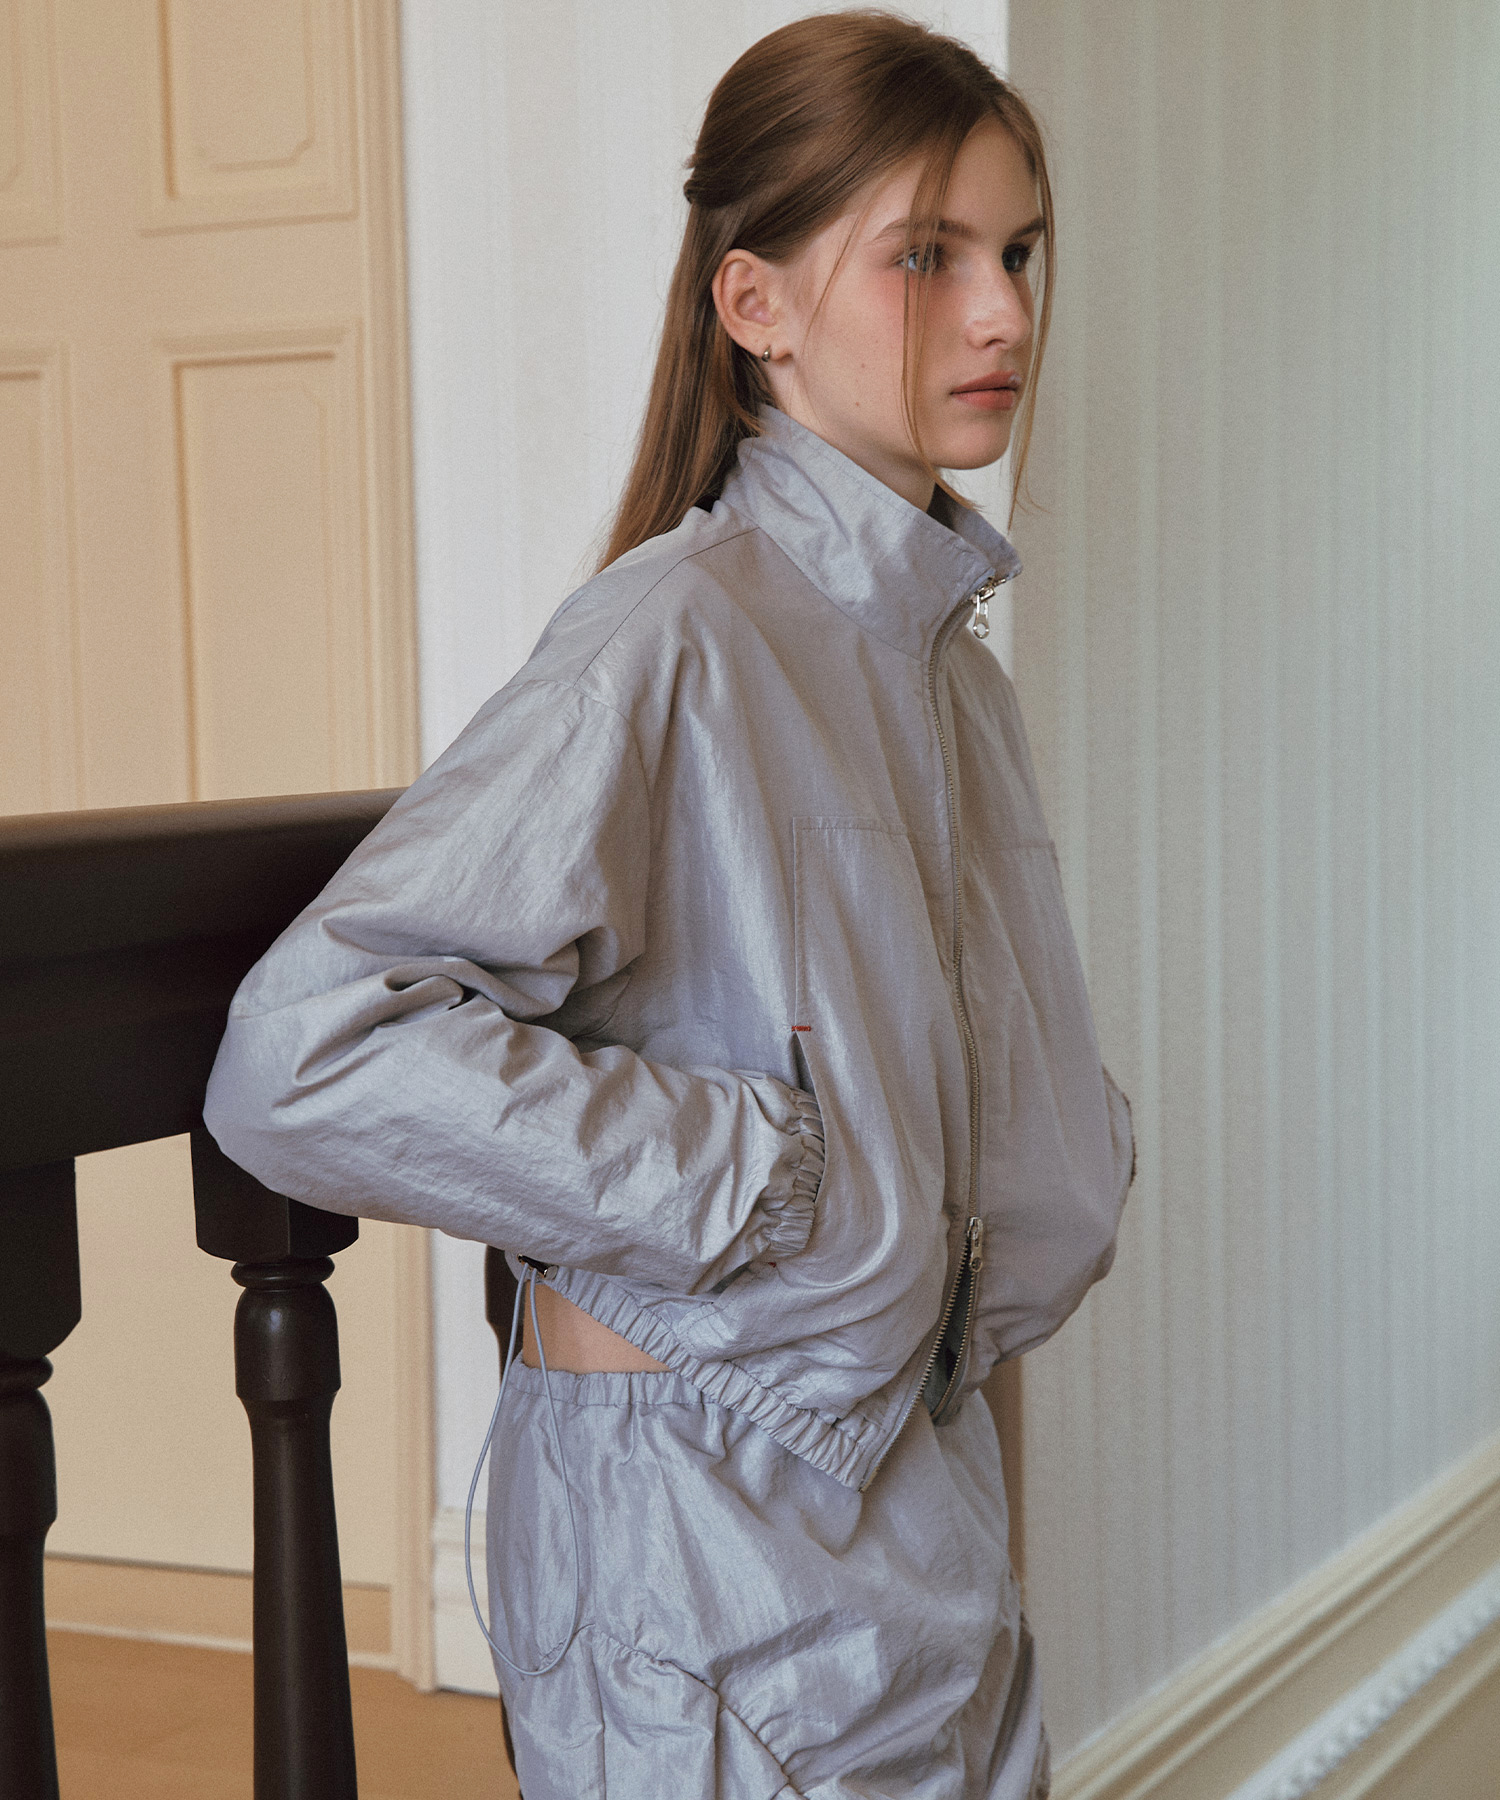 Bartack Point Shirring Nylon Windbreaker Jacket ( Grey )